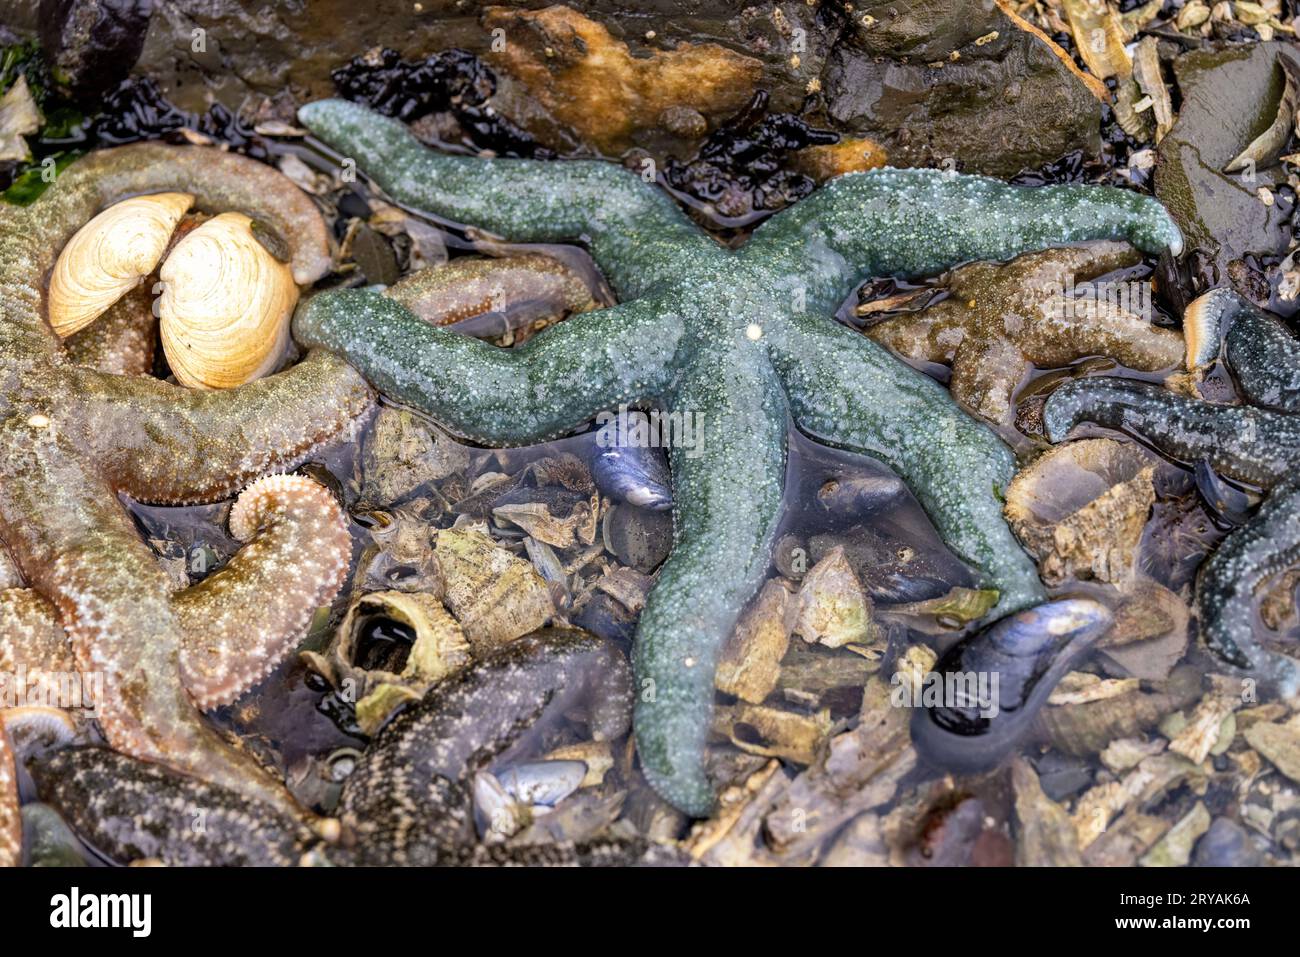 Colorful sea stars (starfish) in a tidal pool - Icy Strait Point, Hoonah, Alaska, USA Stock Photo